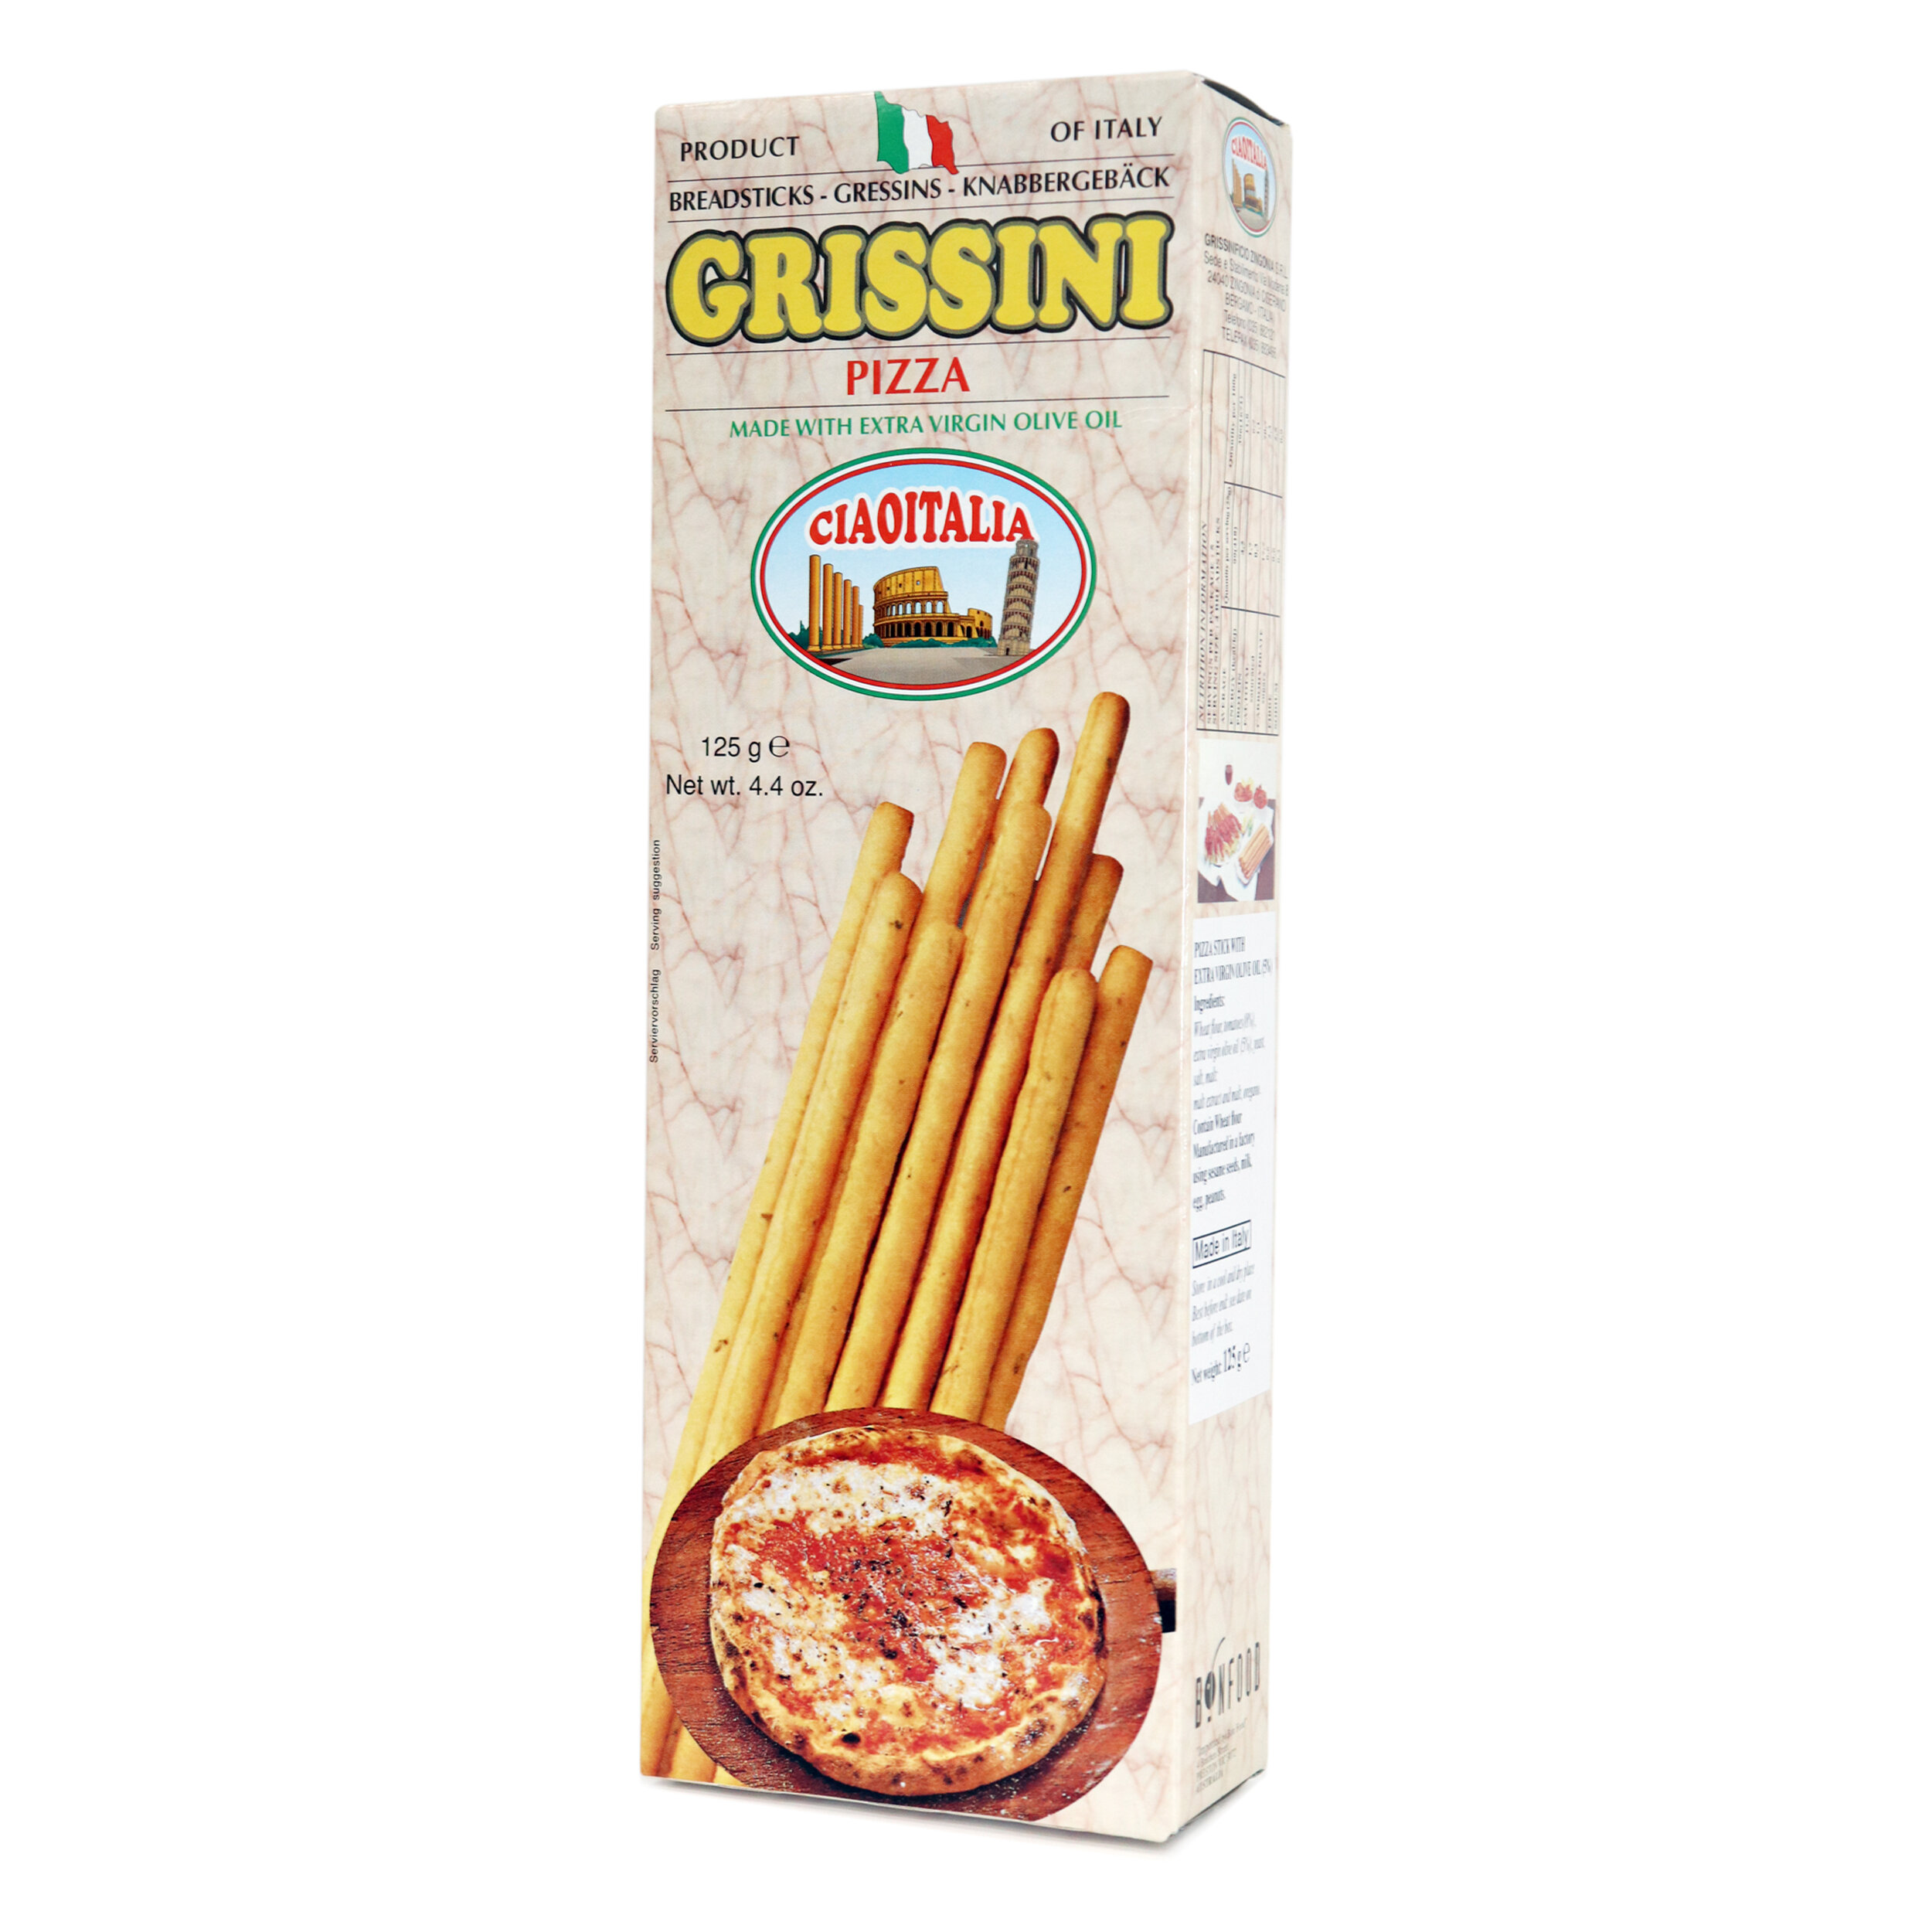 P1-Grissini pizza.jpg